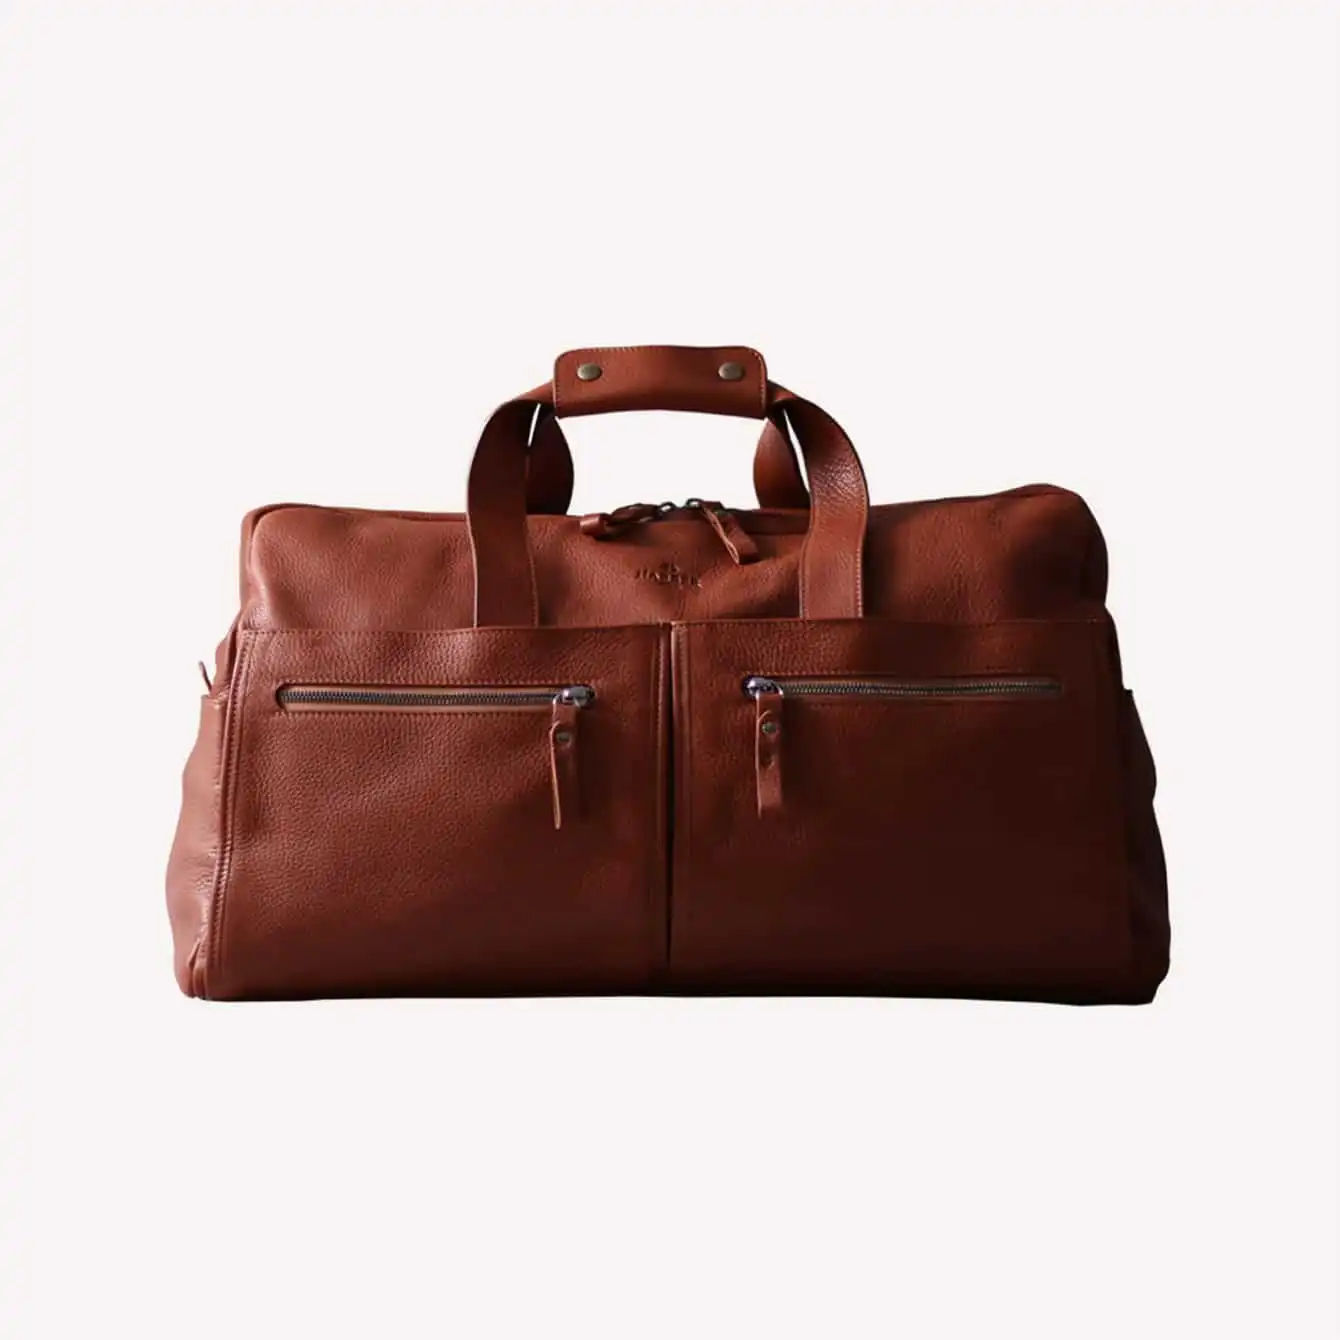 Harber London Leather Weekender Bag